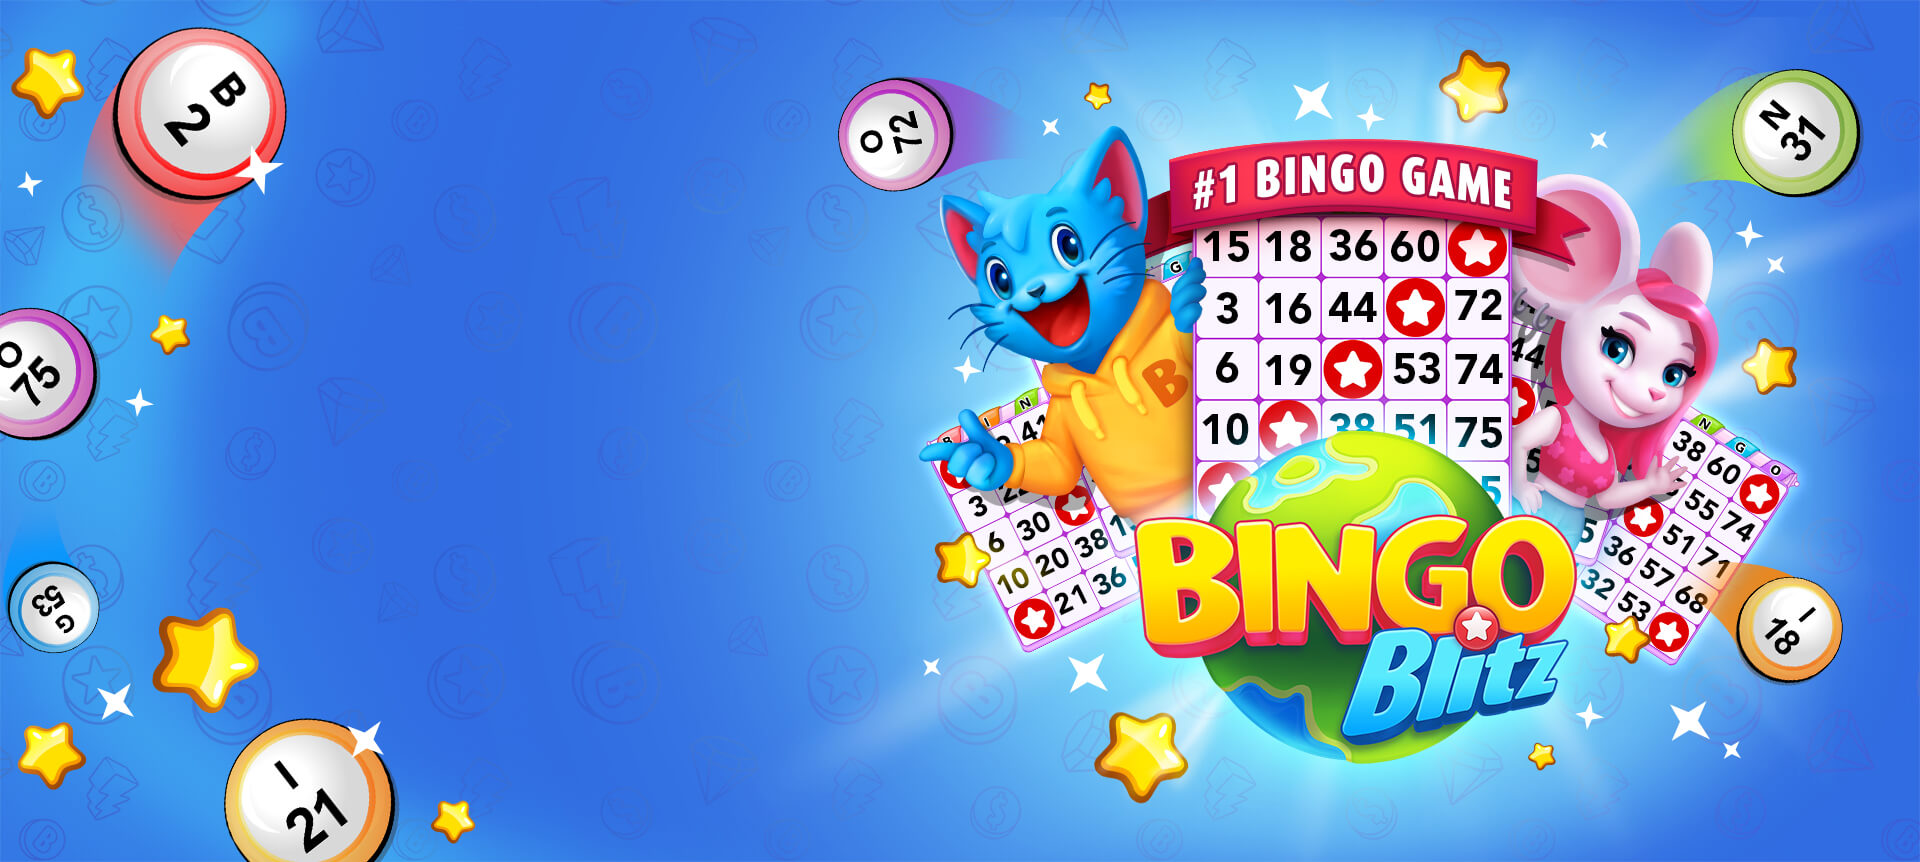 Bingo Fun - Free Bingo Games,Bingo Games Free Download,Bingo Games